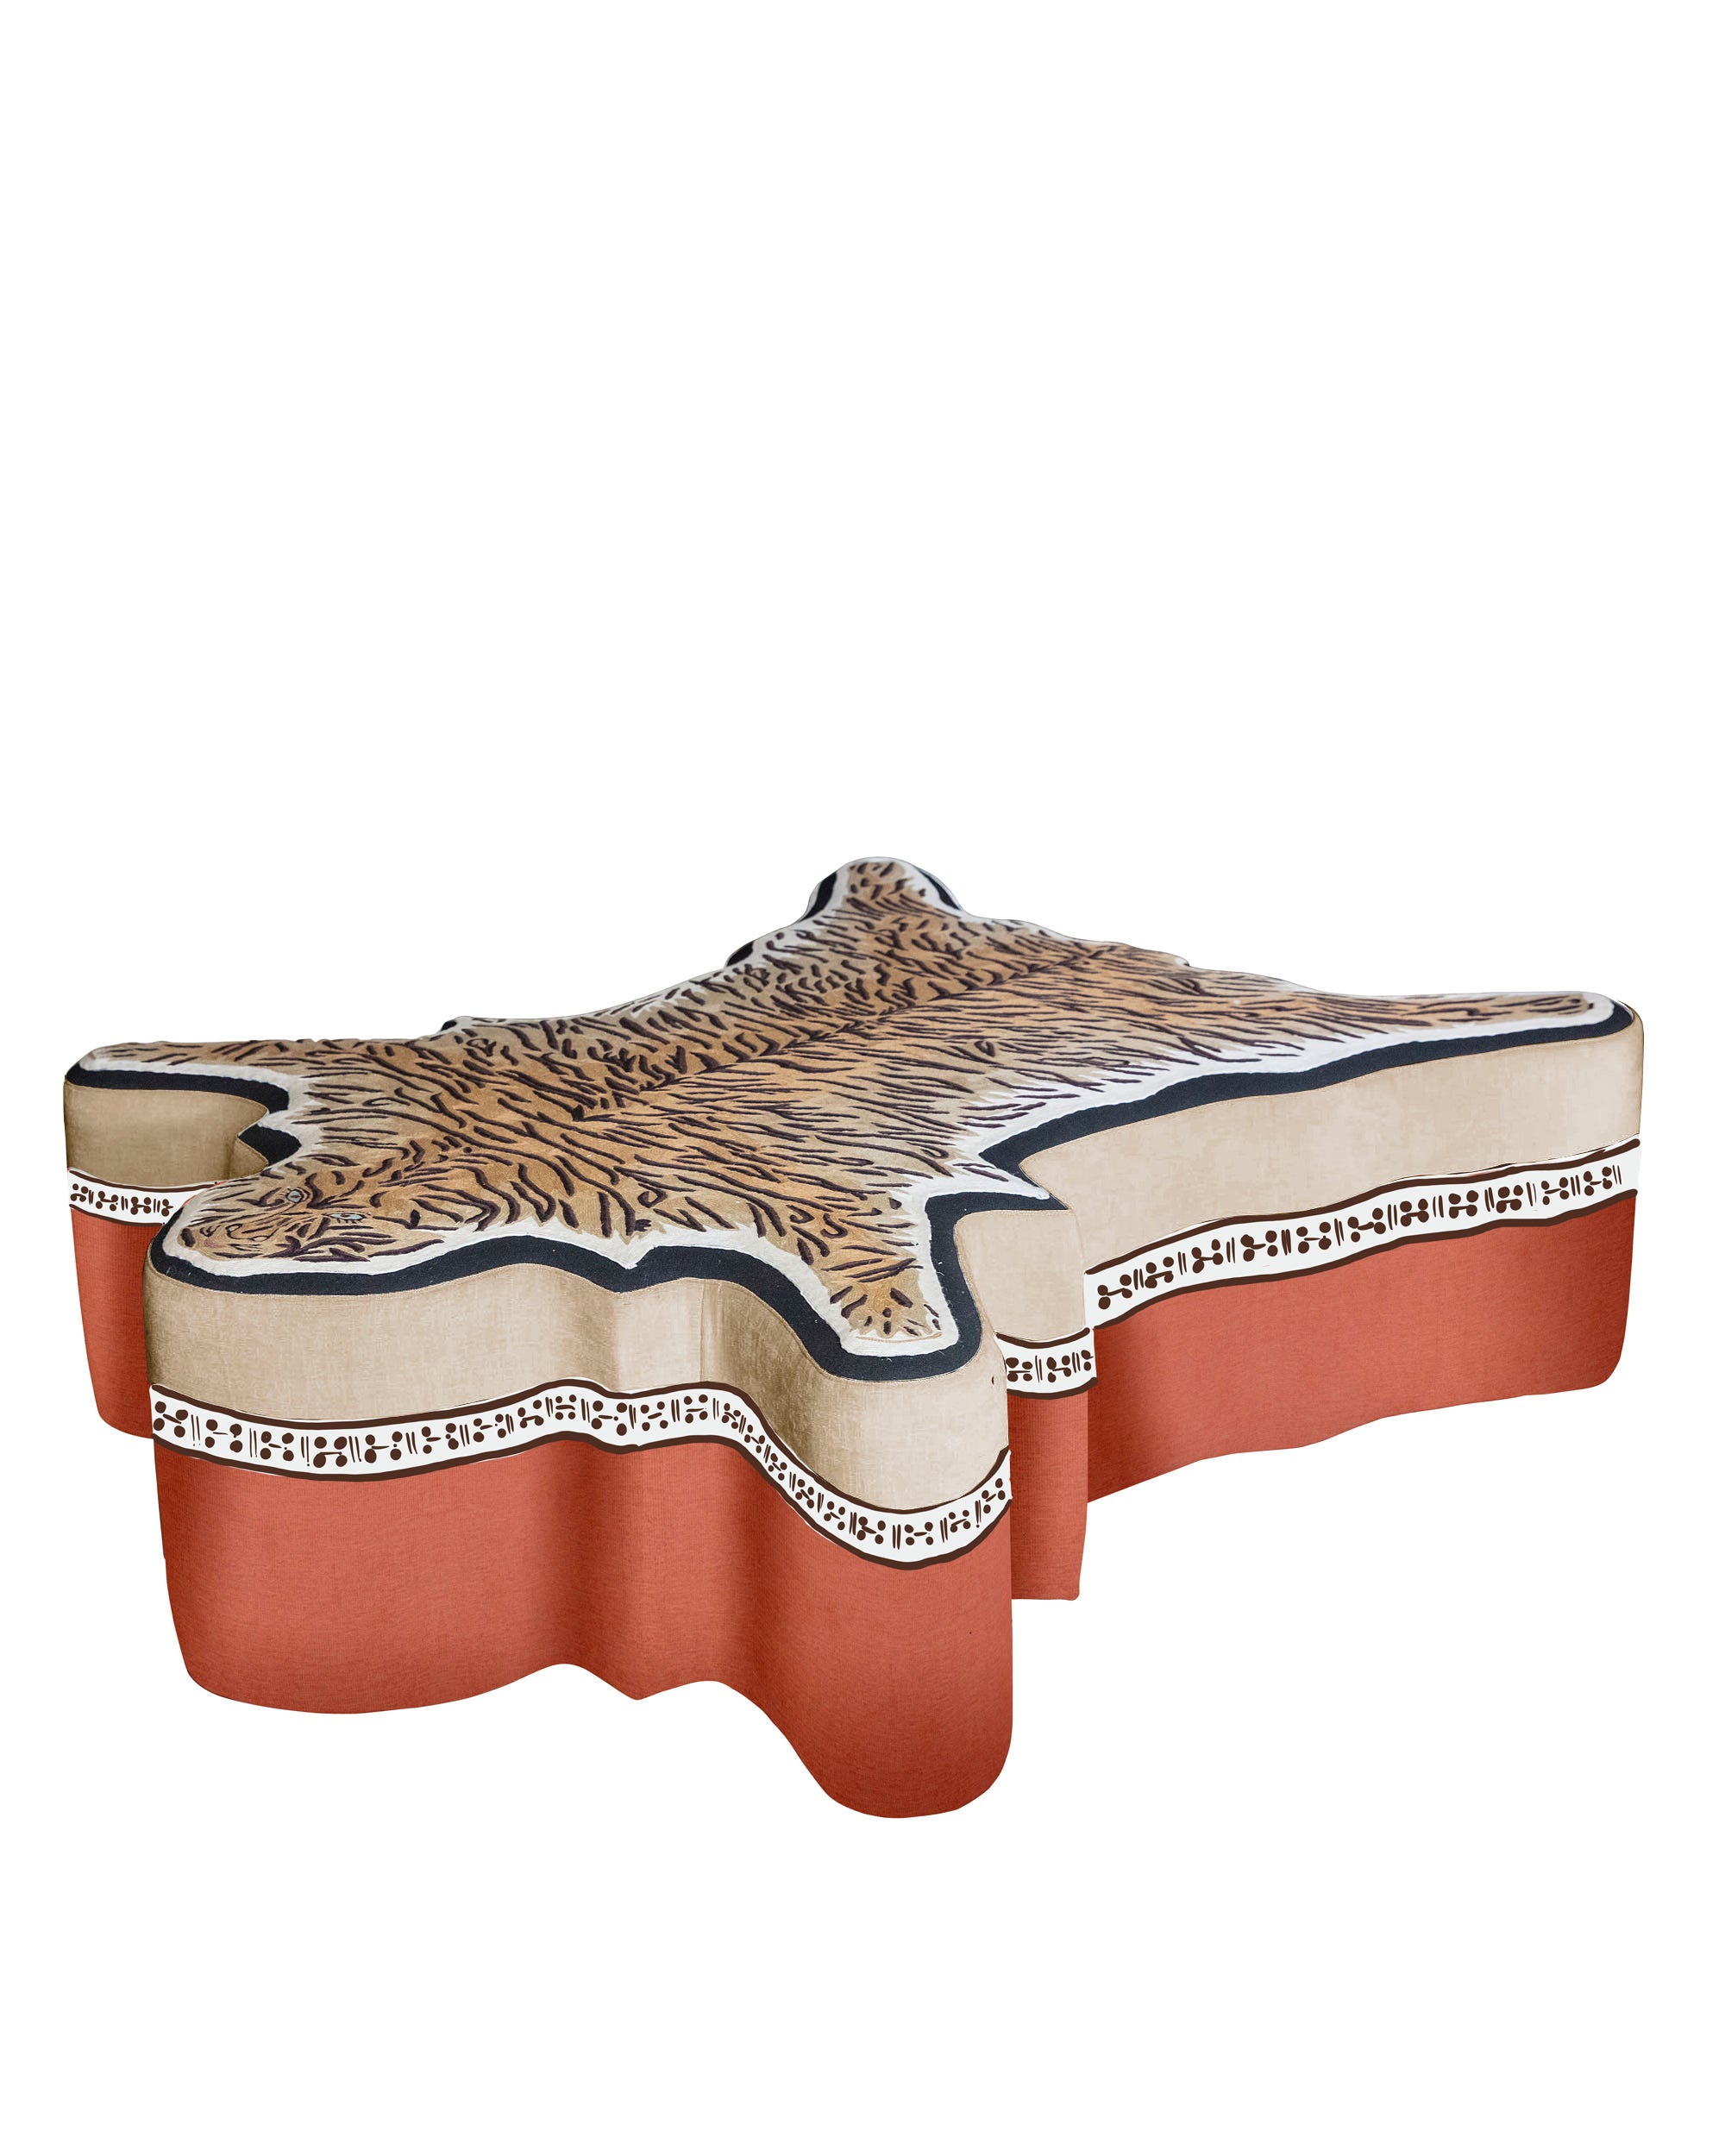 Otomán tapizado con piel de leopardo bordado en lana 100% (Caldero)